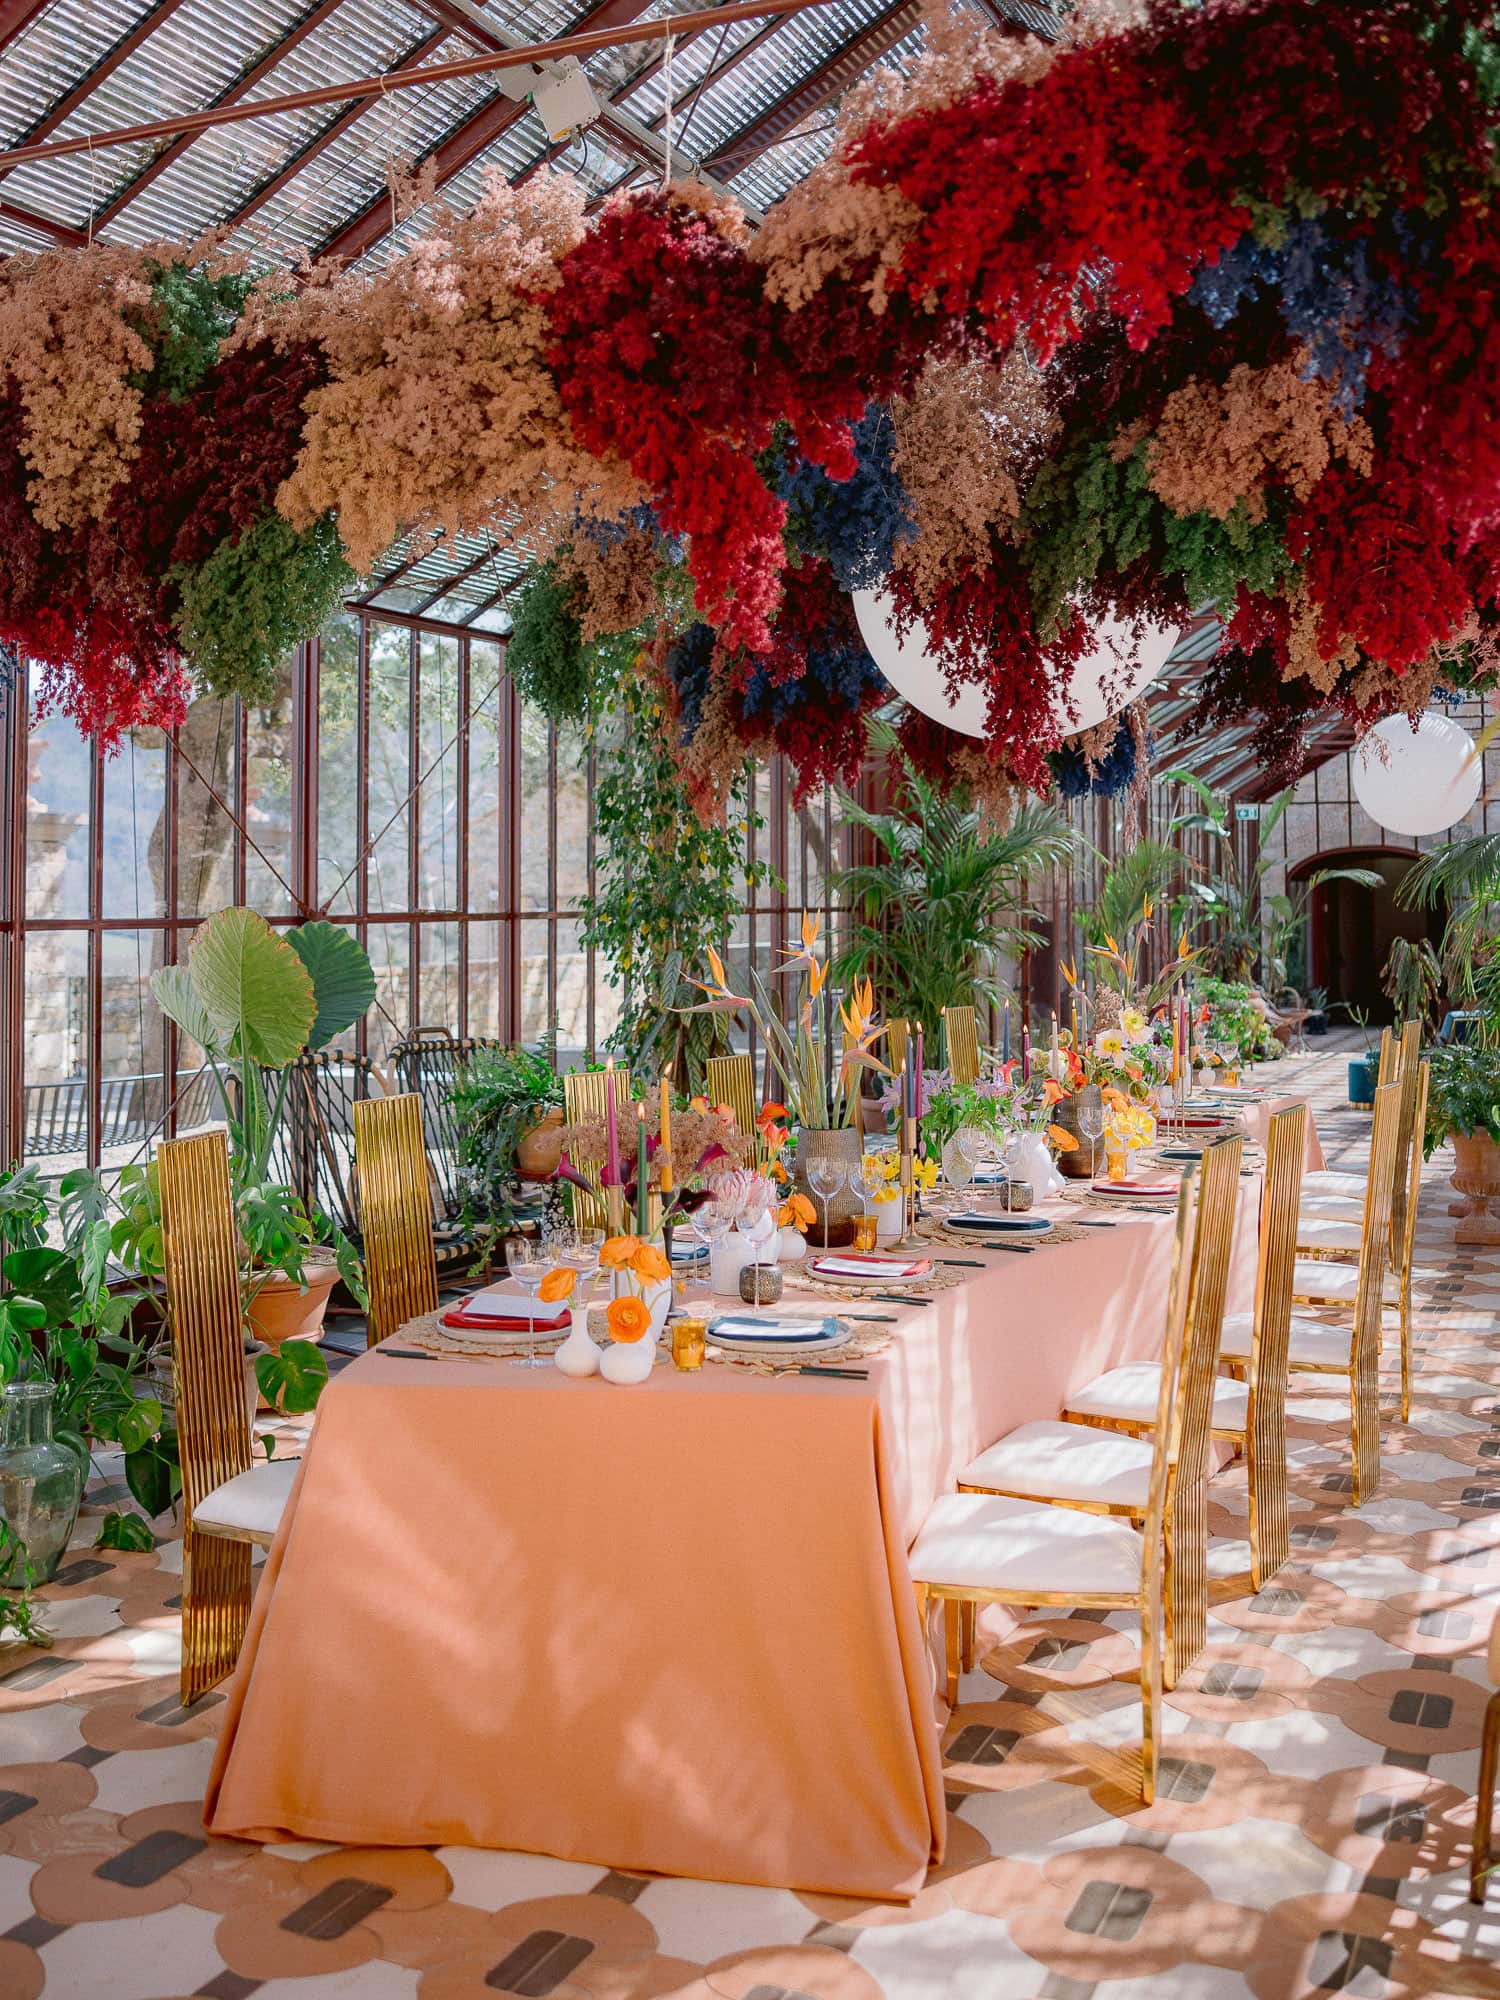 a colorful table setting in the winter garden of Vignamaggio